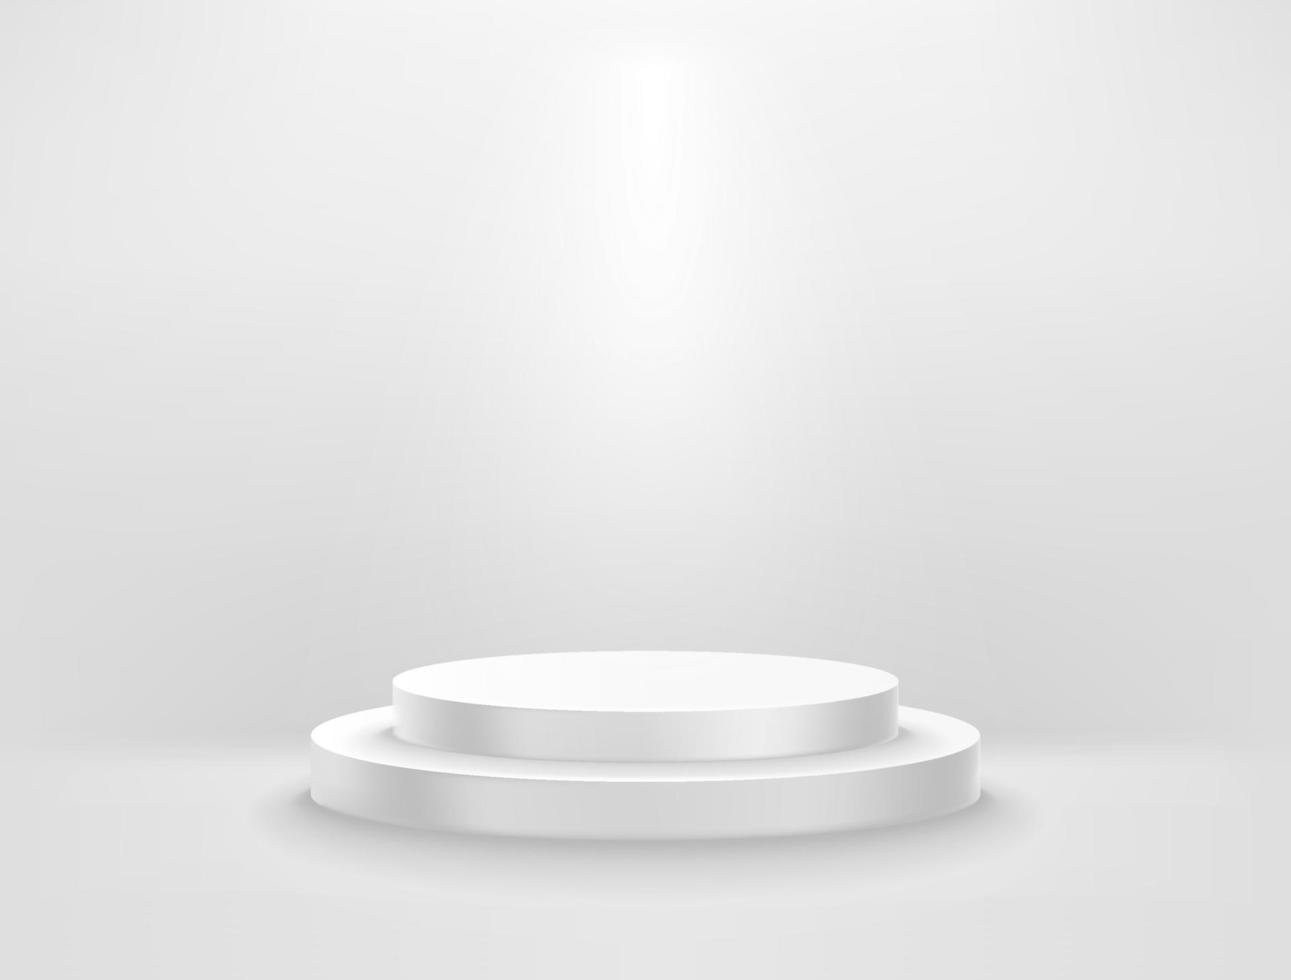 White illuminated room with circle podium. Realistic 3d style vector illustration